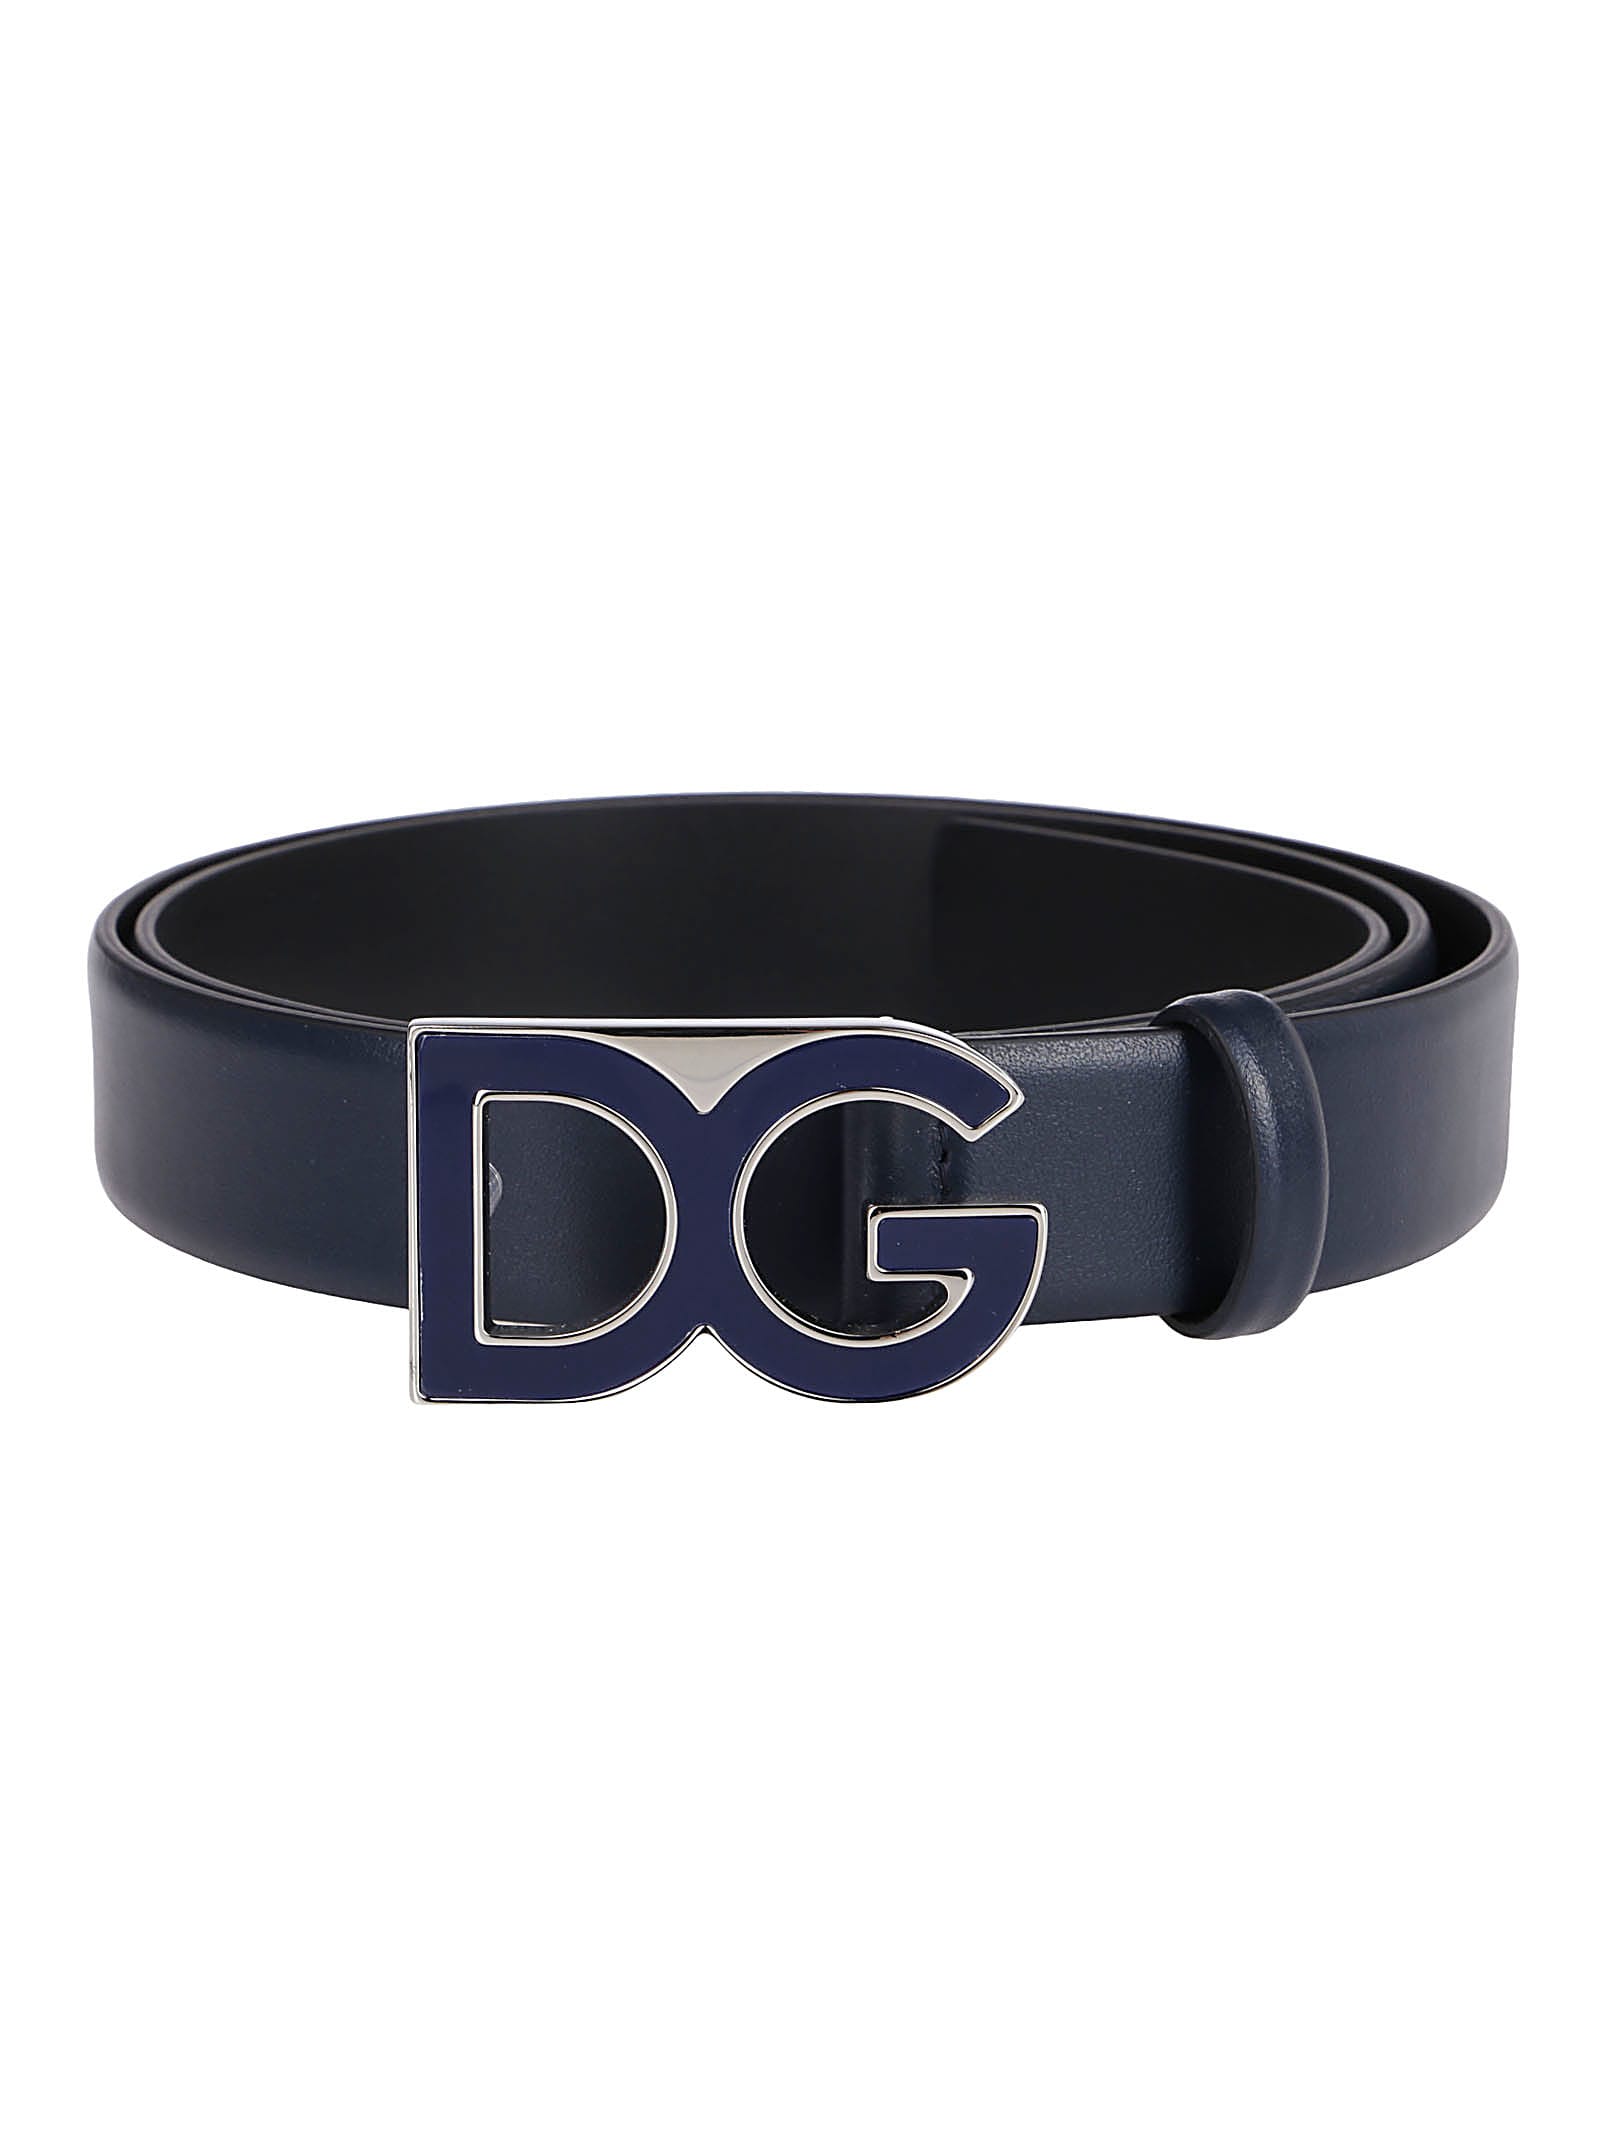 Dolce & Gabbana Navy Blue Leather Belt